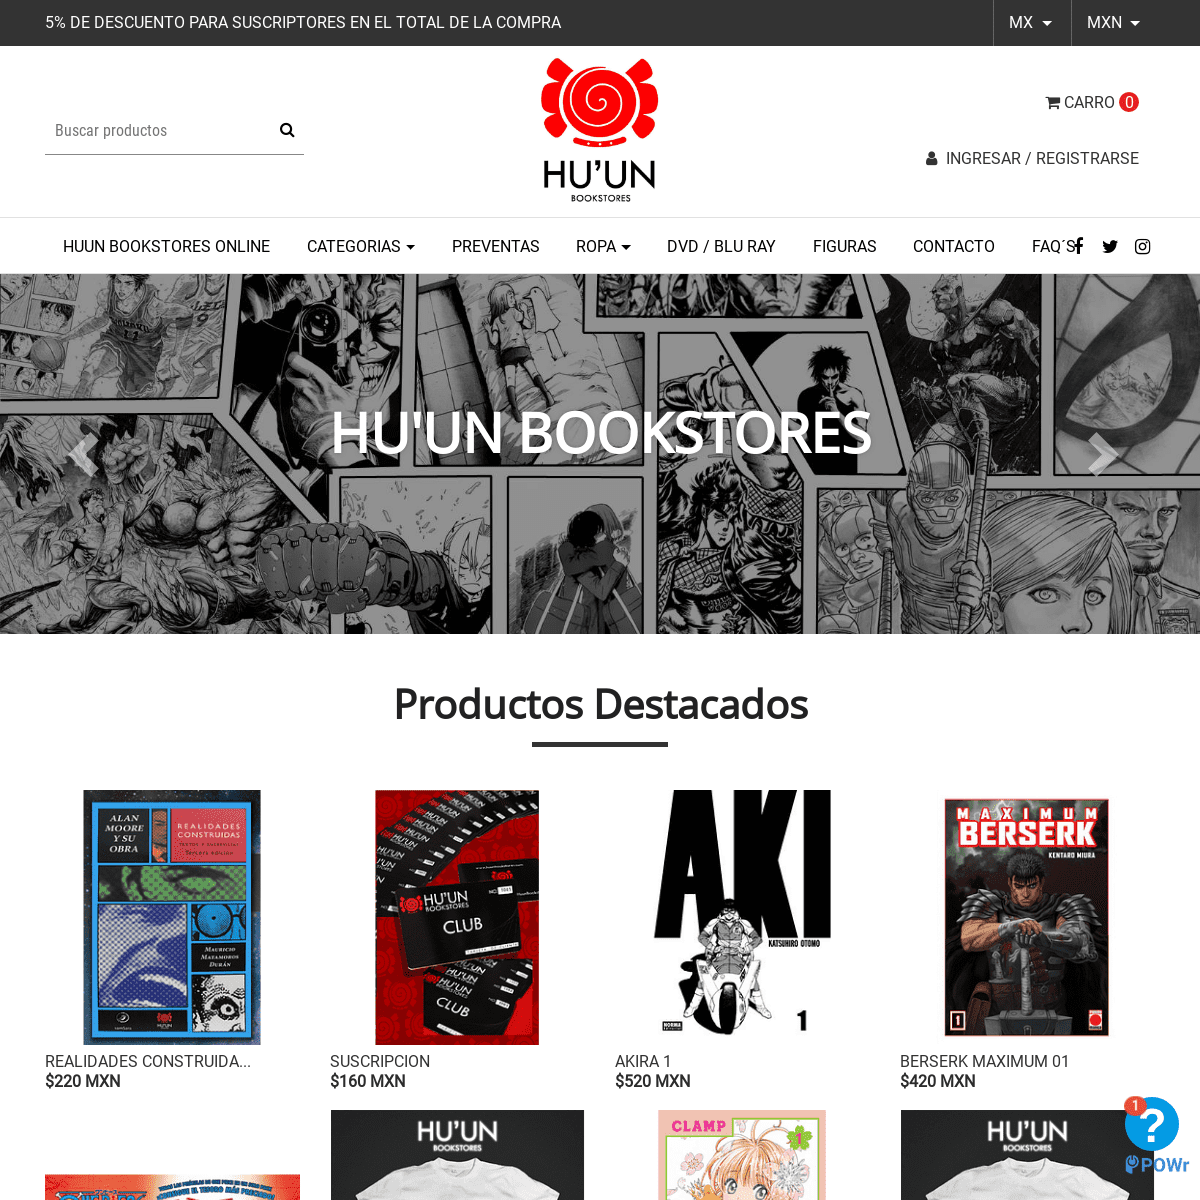 A complete backup of huunbookstoreswebshop.com